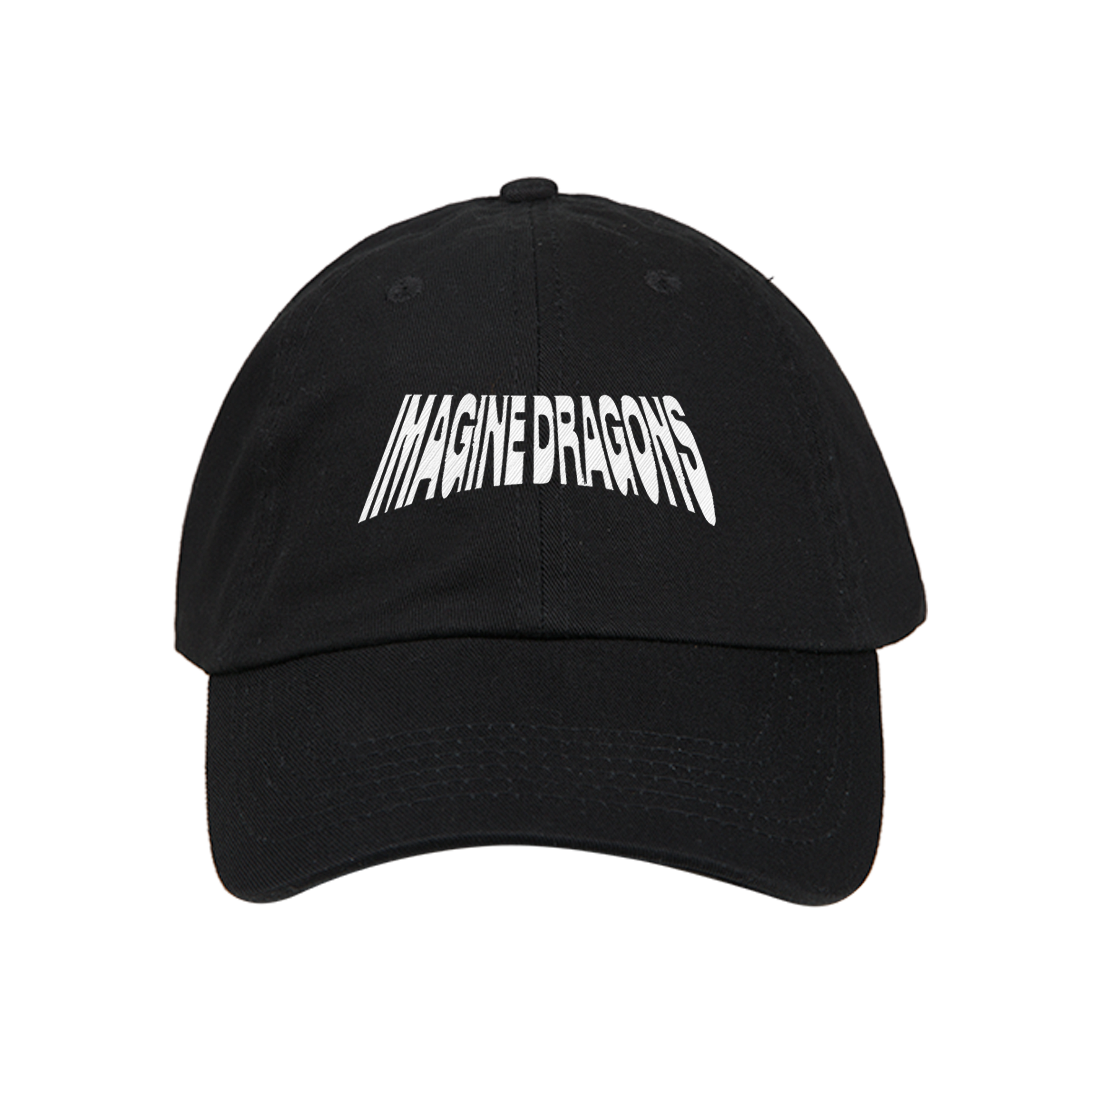 Imagine Dragons - Youth Logo Hat